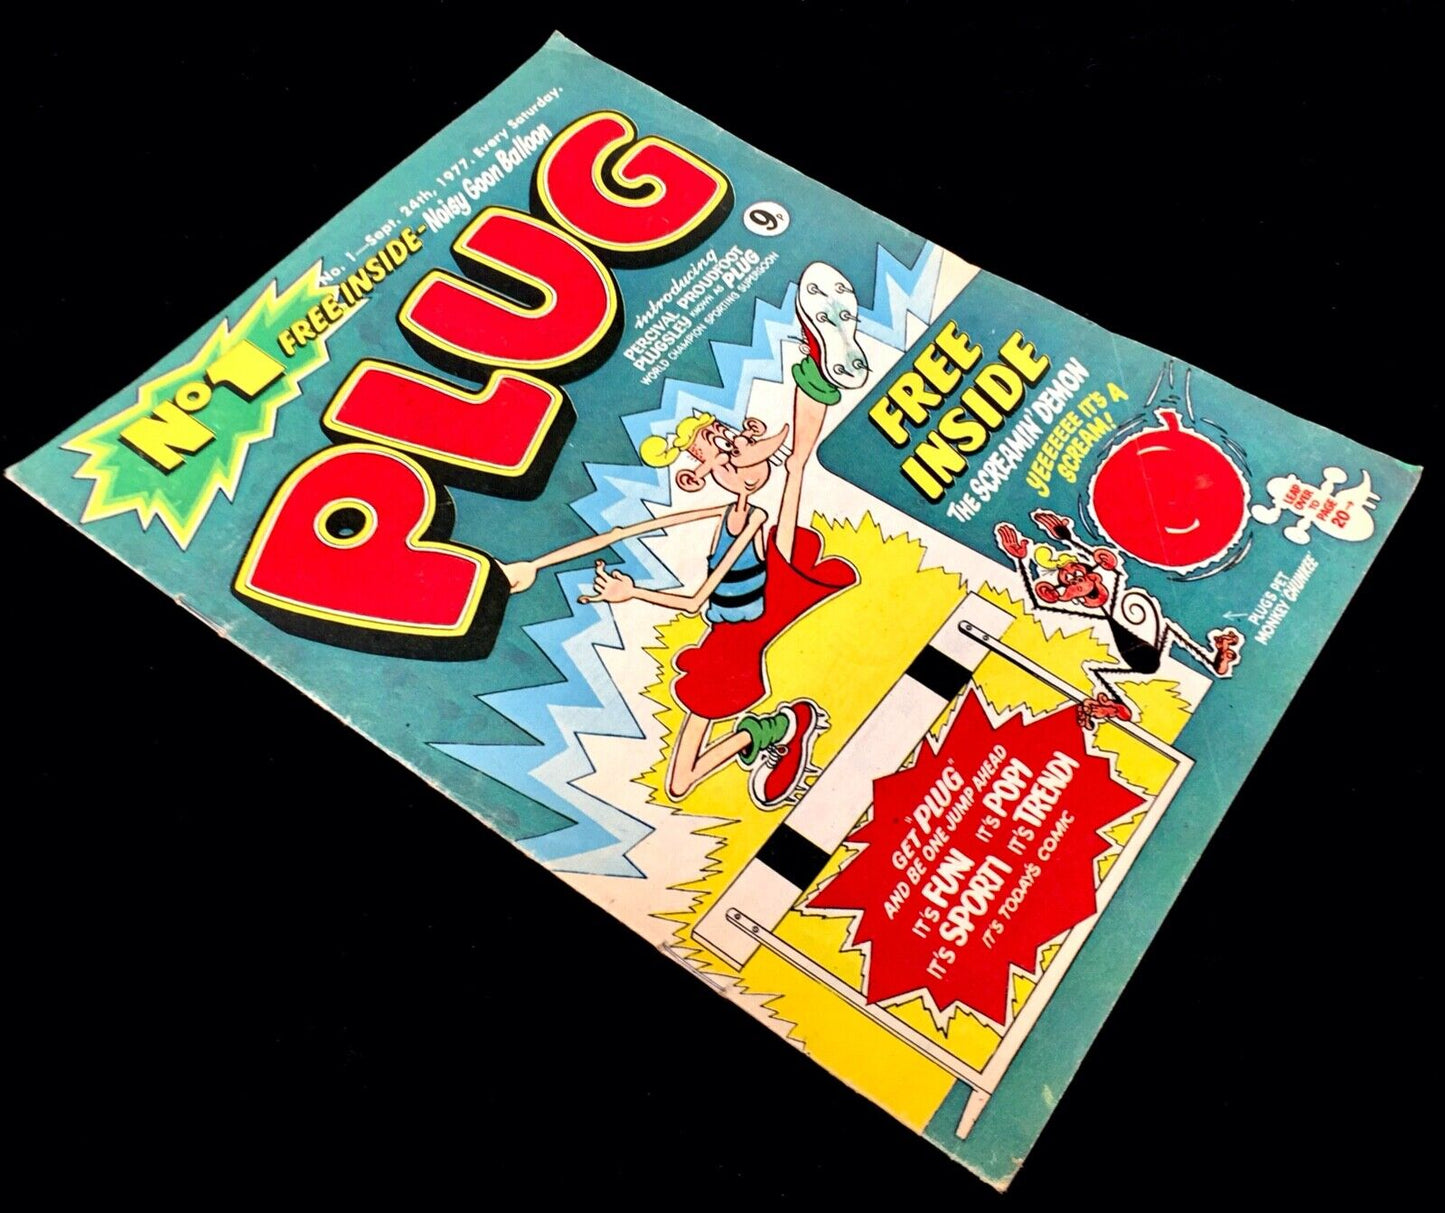 Plug comic 1st Edition Comic / September 1977 by D C Thompson & Co / Vintage